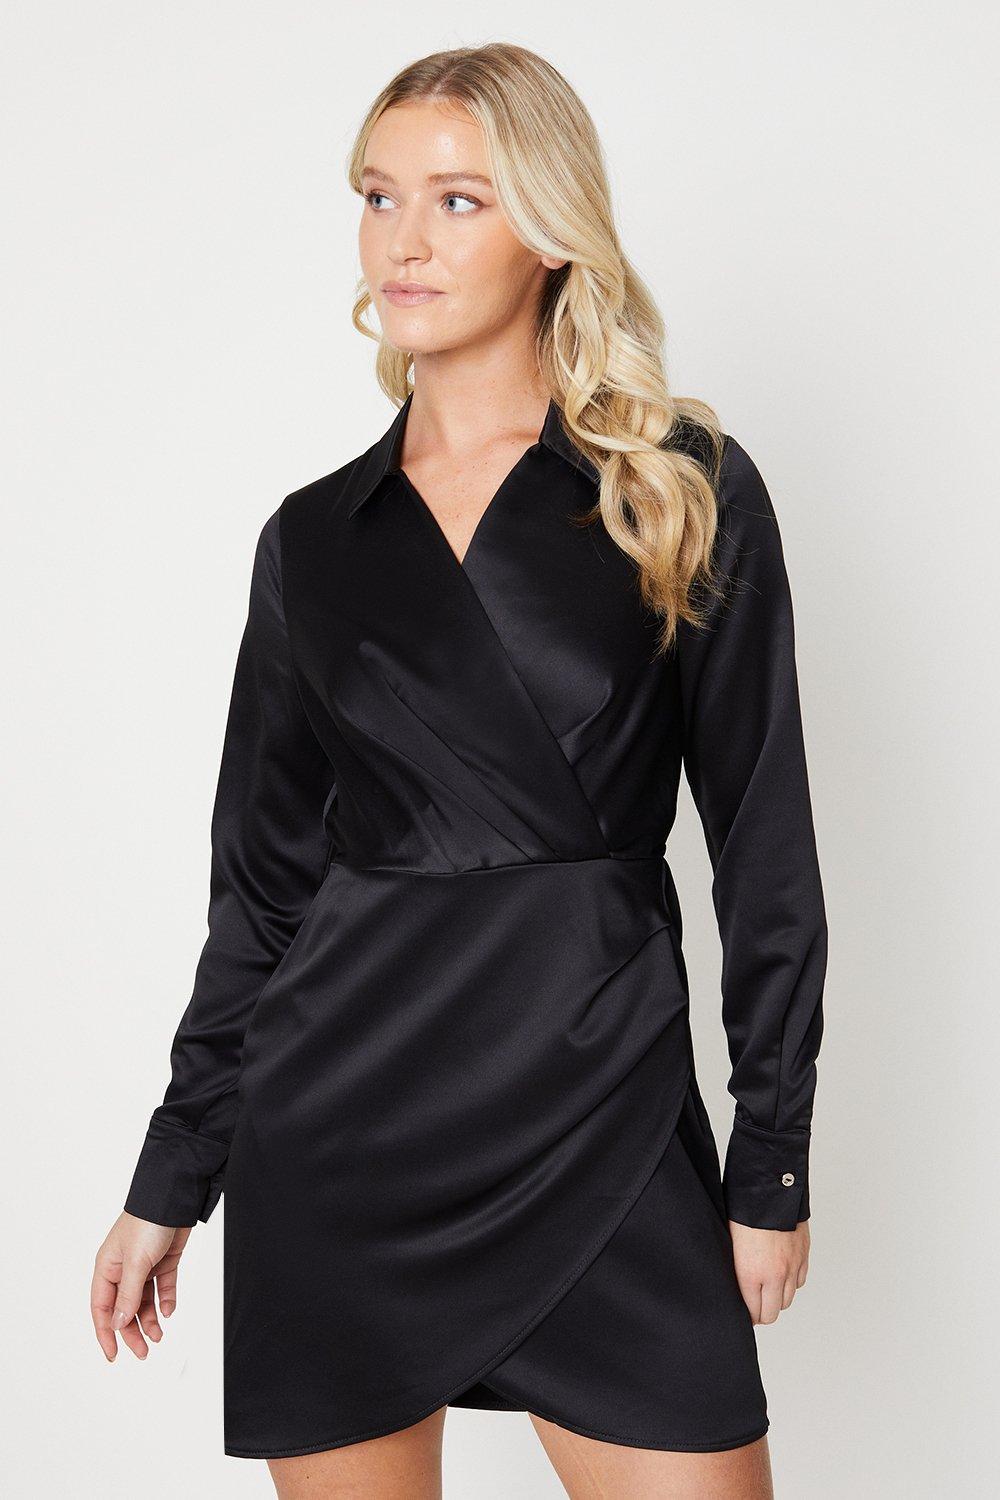 Women's Black Wrap Over Ruched Mini Dress - 14